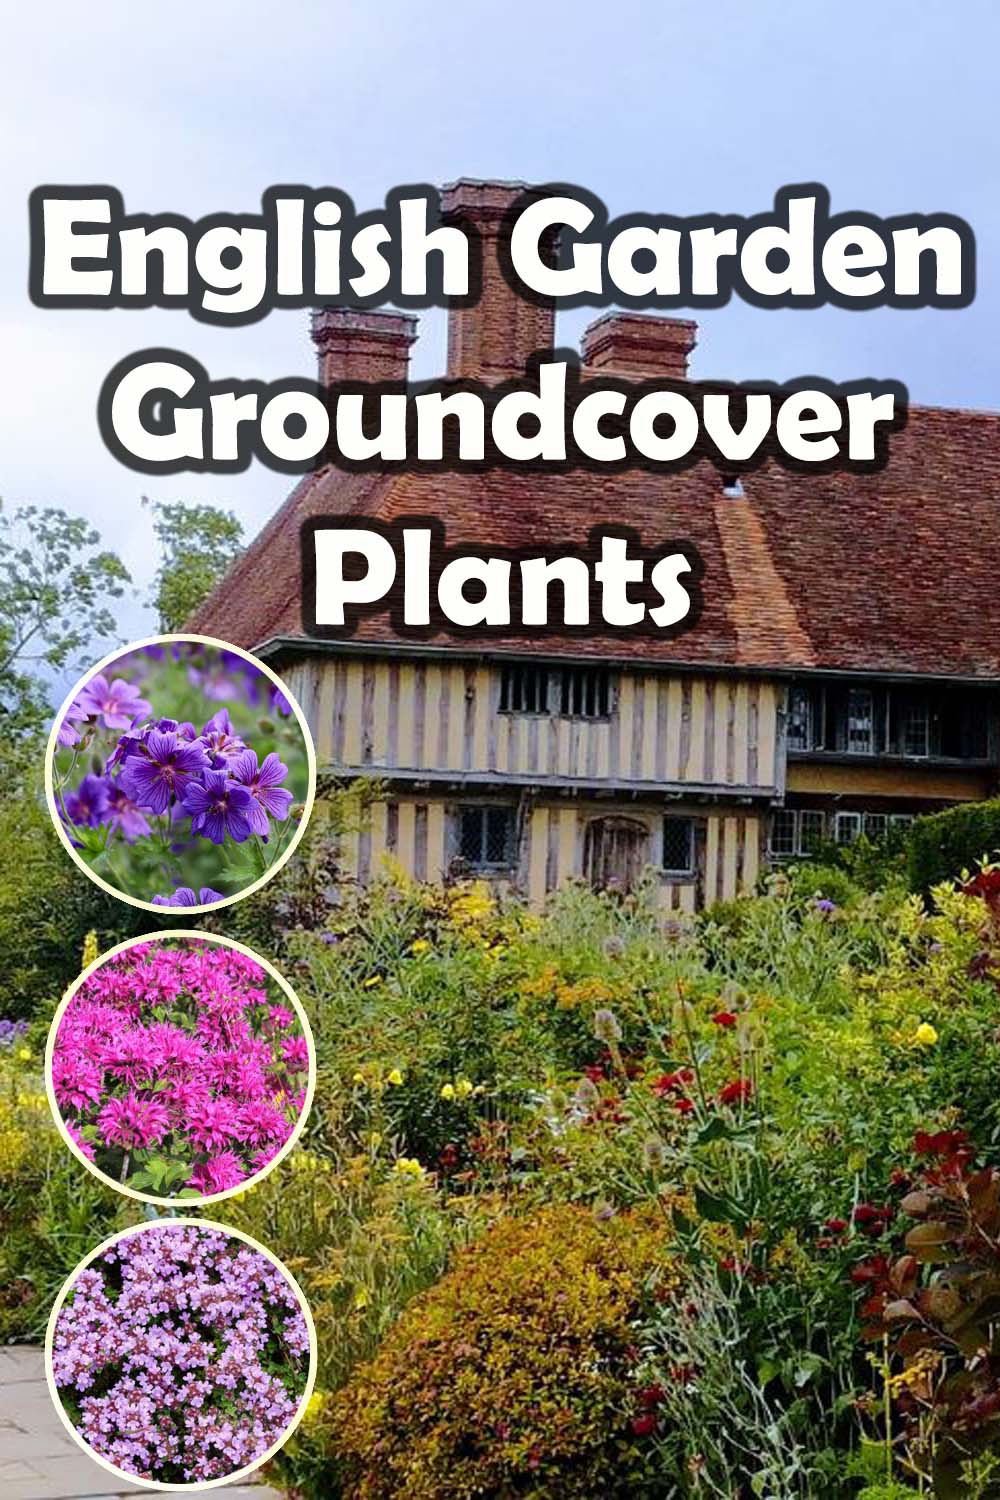 English garden groundcovers